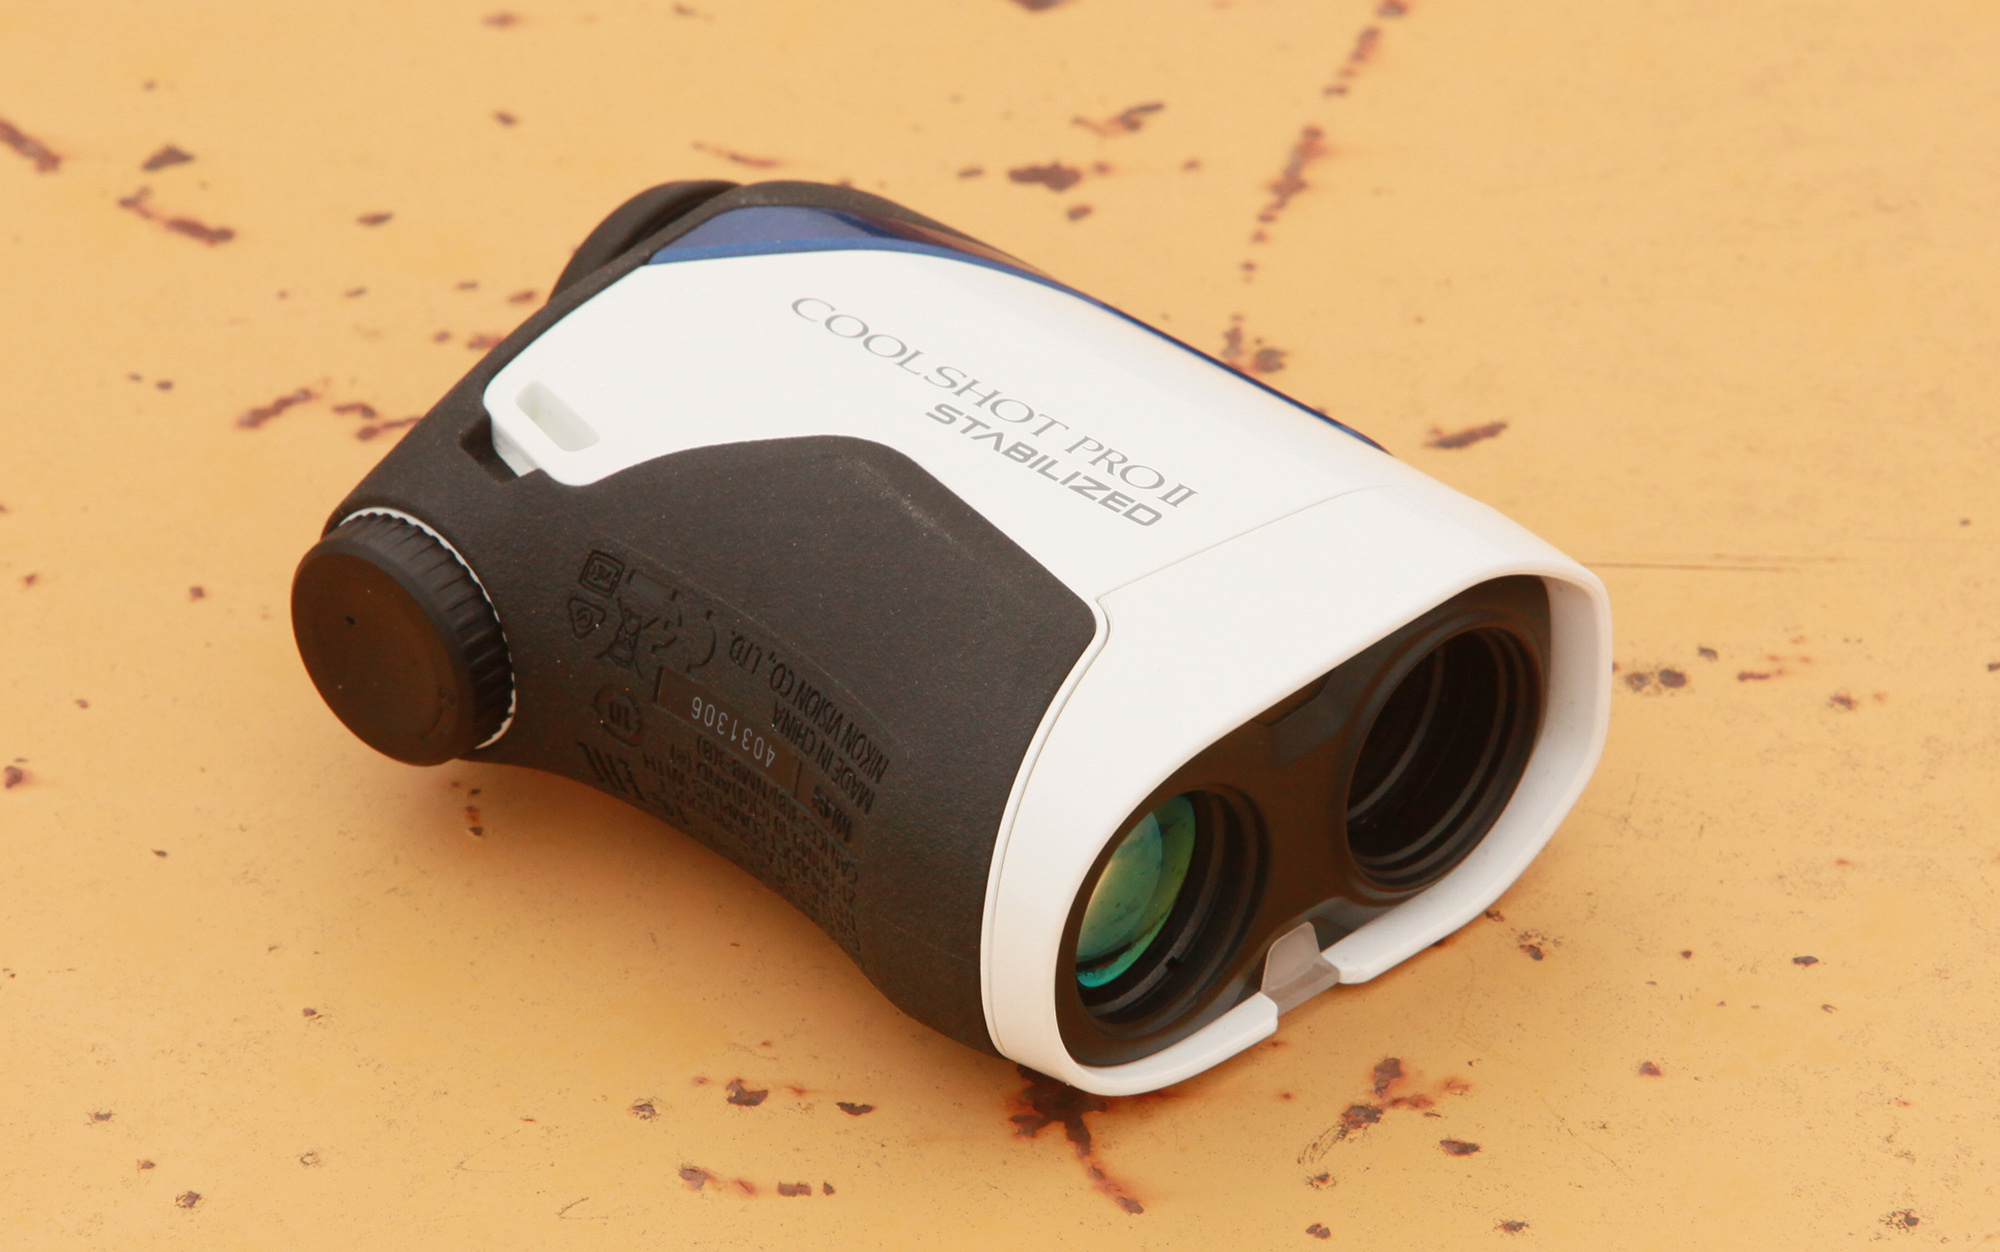 The Nikon Coolshot Pro II Stabilized is a monocular rangefinder.